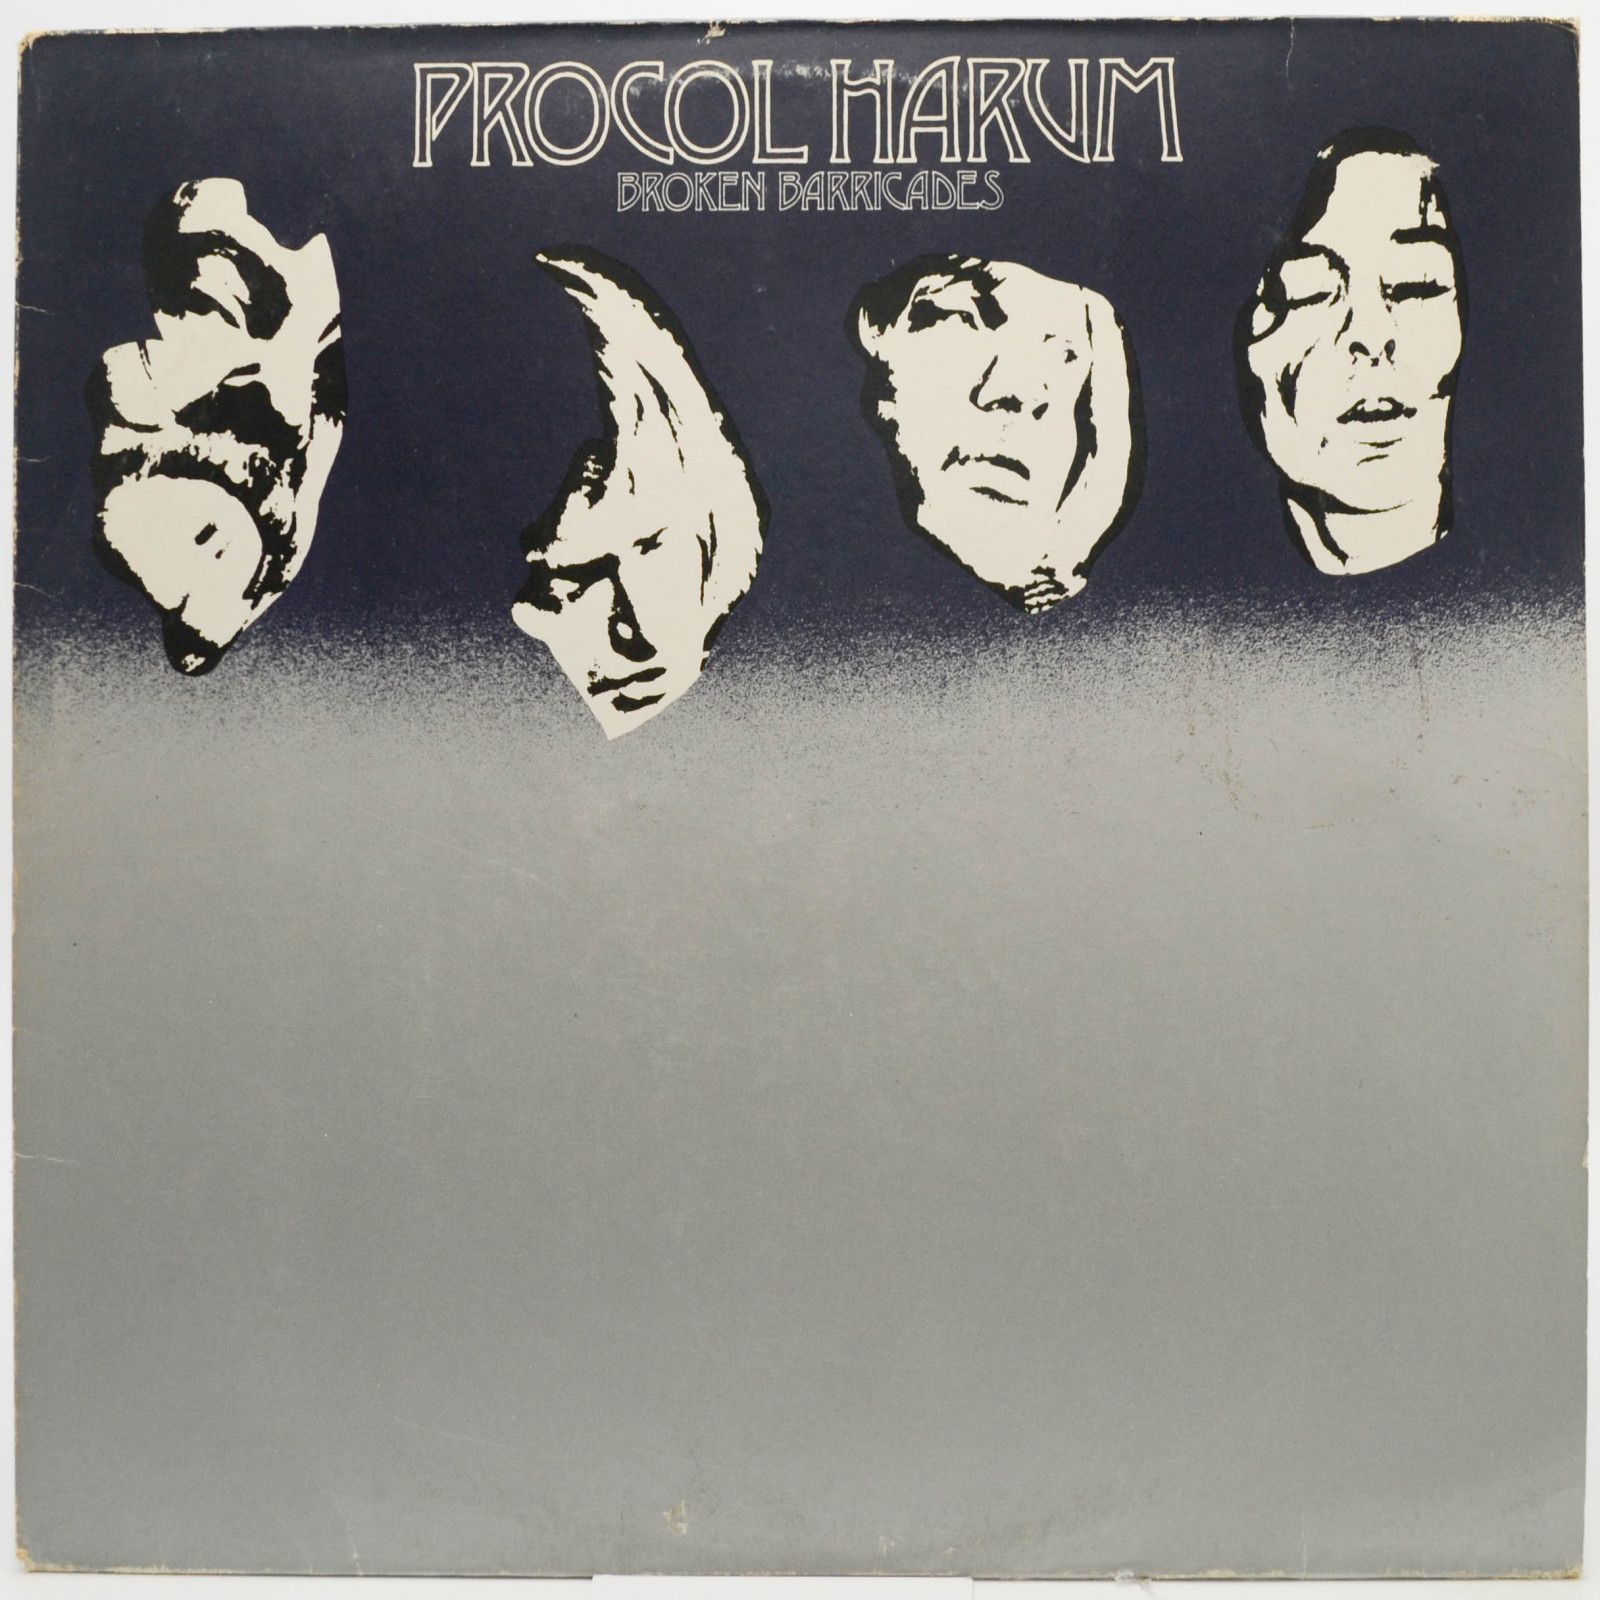 Procol Harum — Broken Barricades, 1971